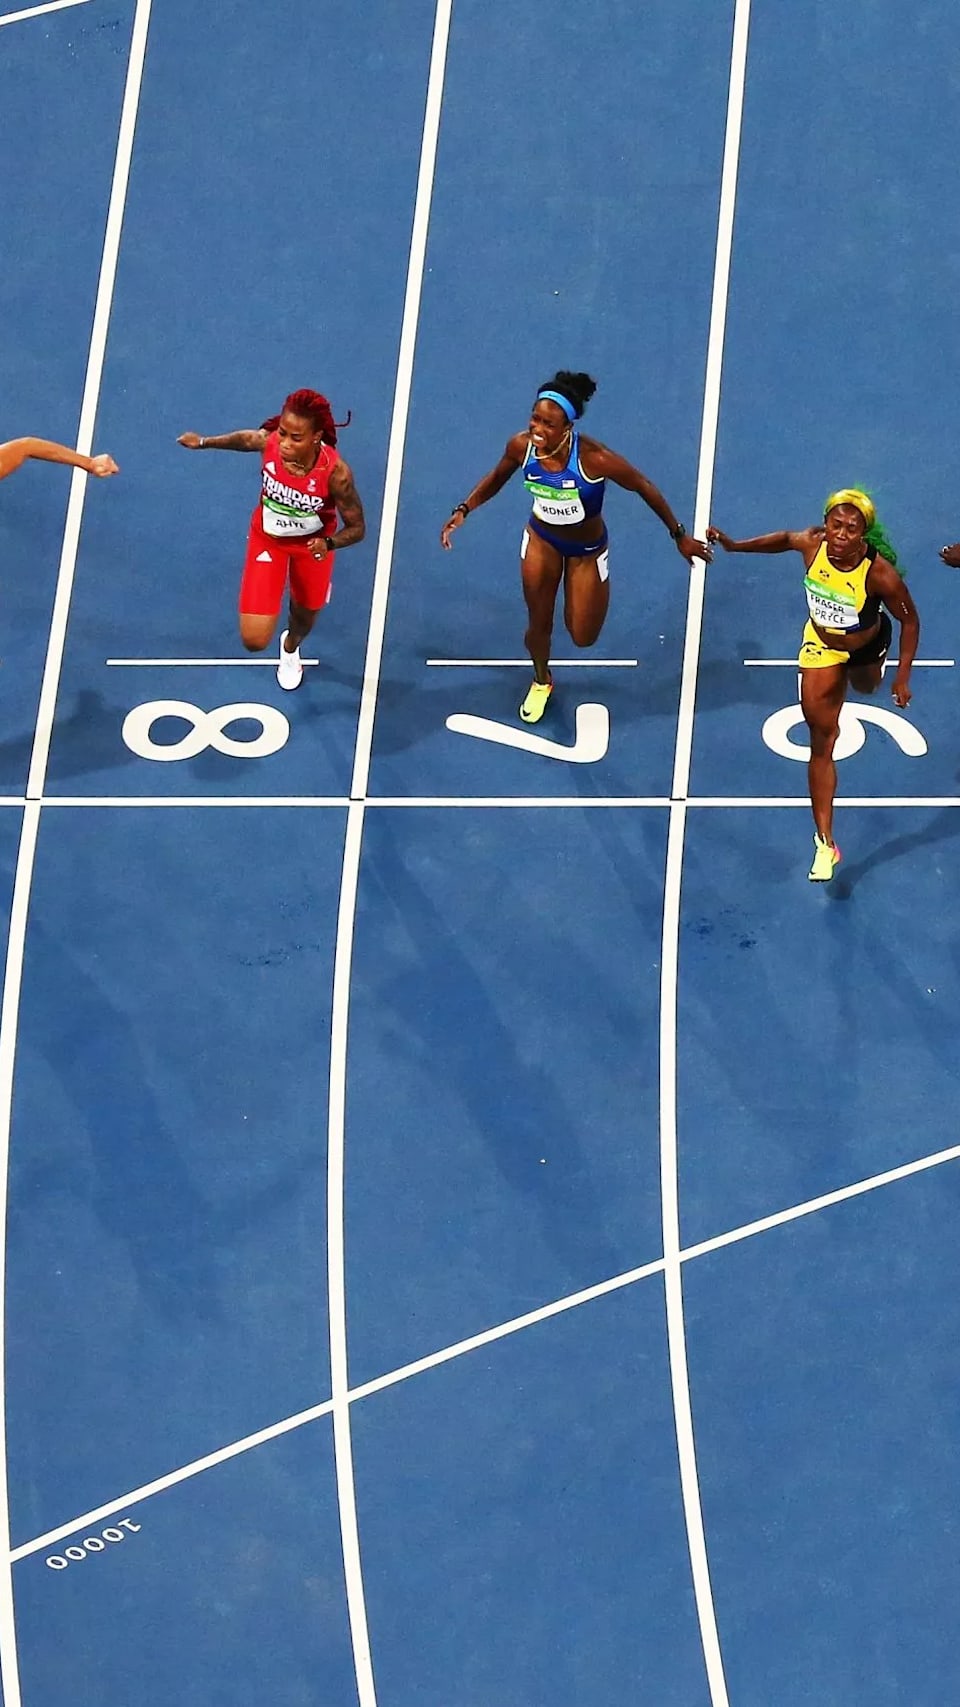 Athlete champions for women's decathlon in Olympics